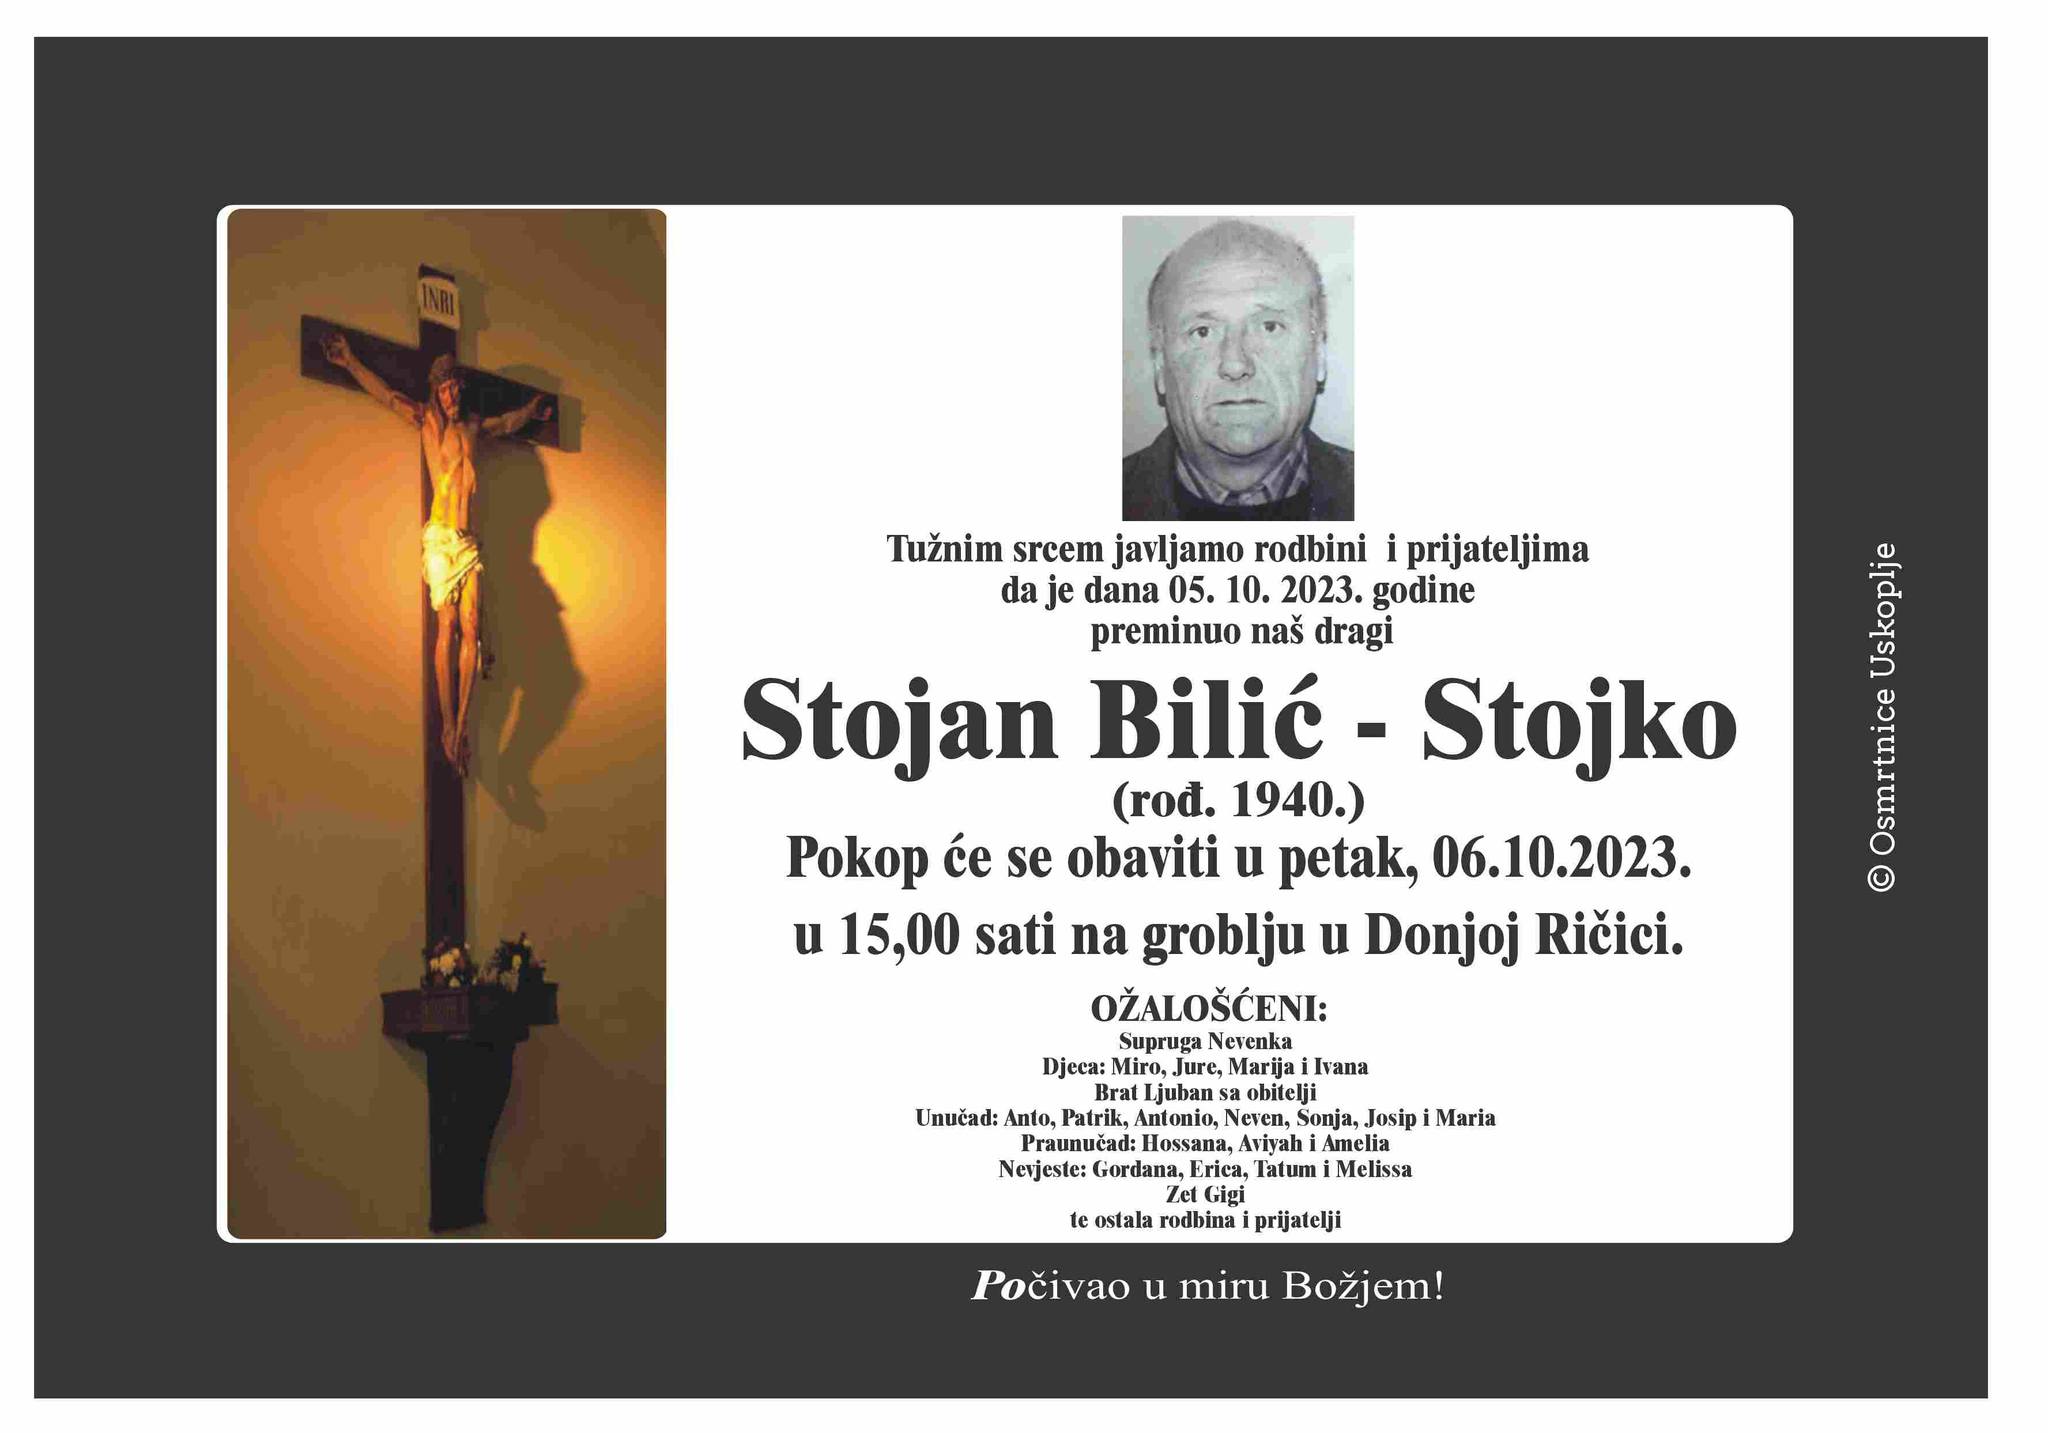 Stojan Bilic